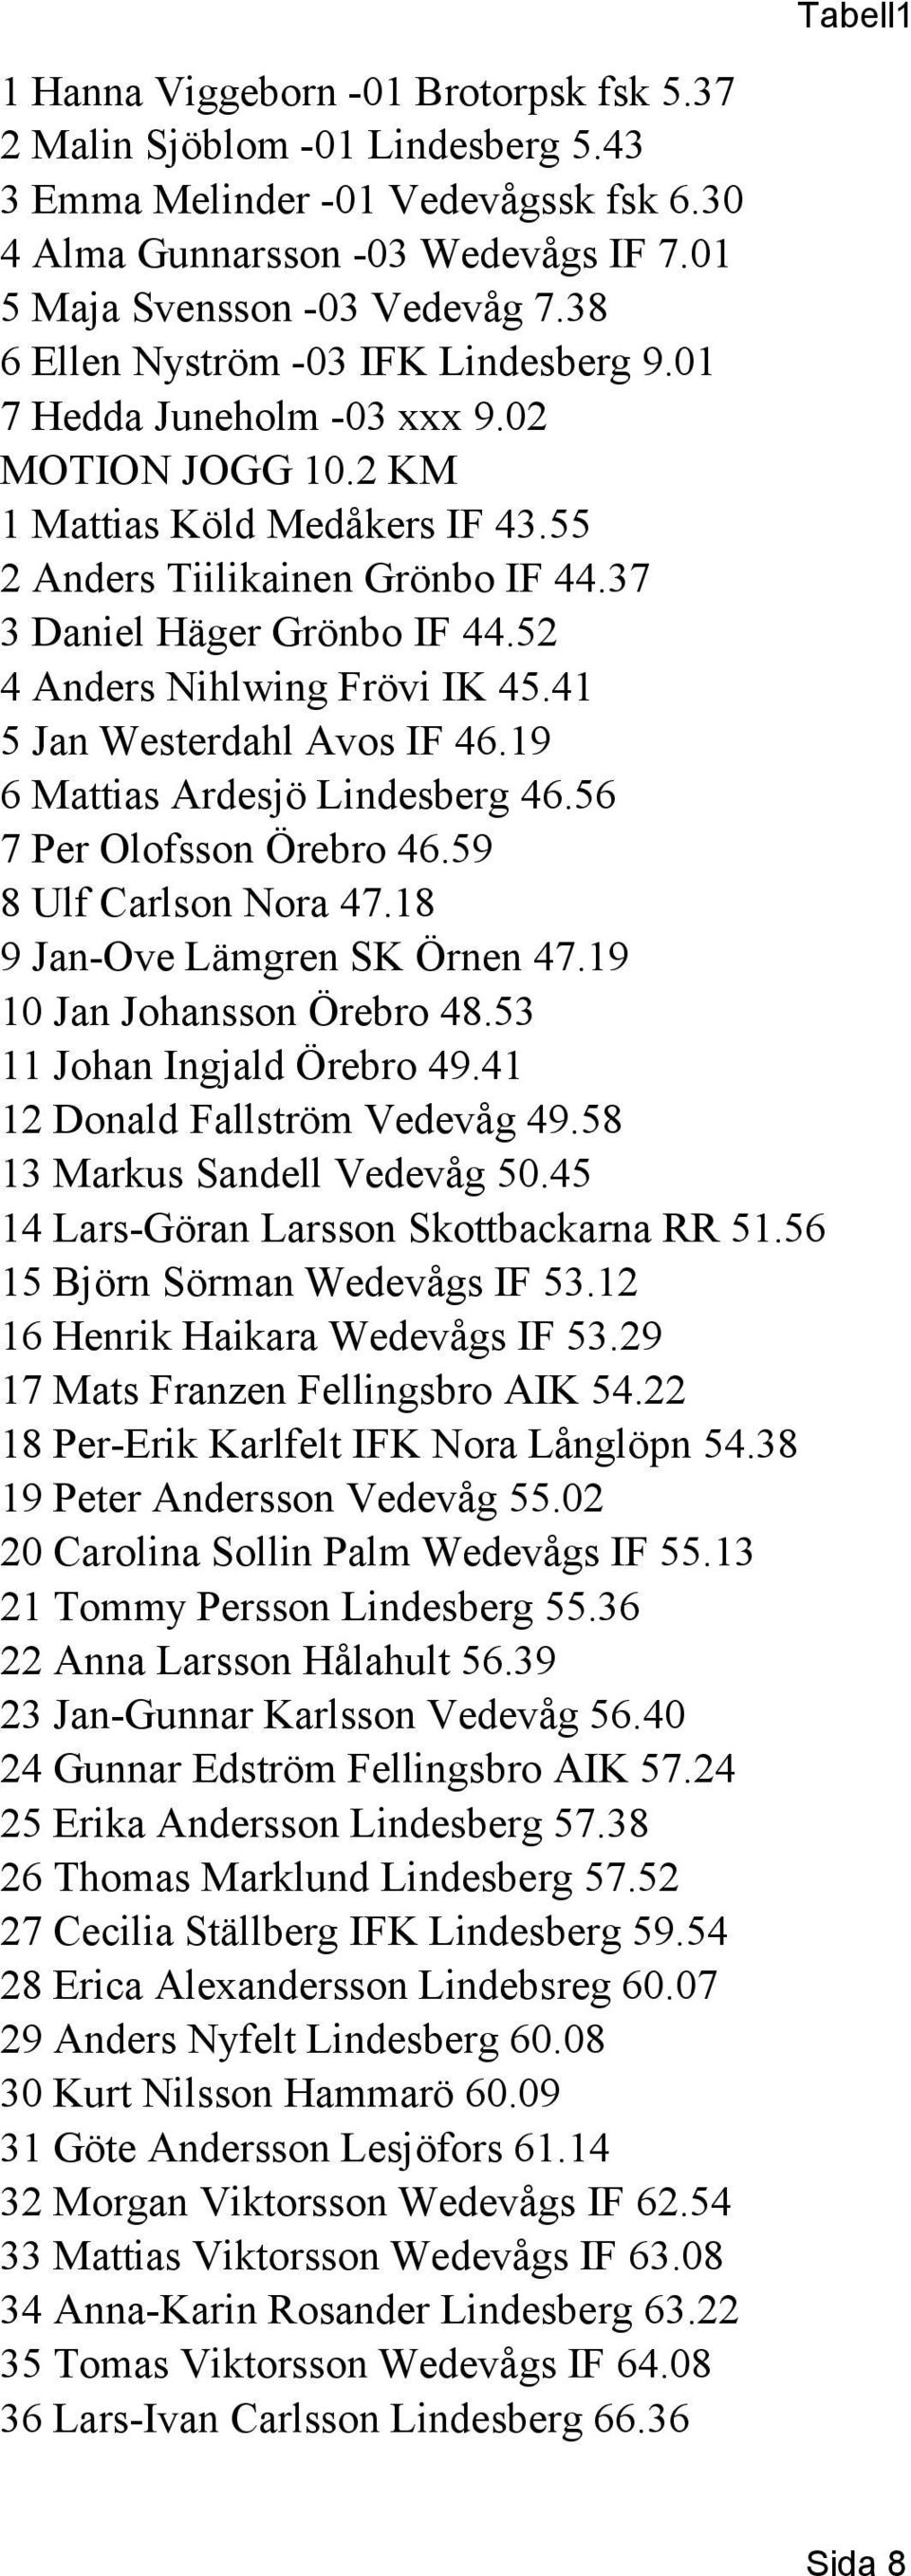 52 4 Anders Nihlwing Frövi IK 45.41 5 Jan Westerdahl Avos IF 46.19 6 Mattias Ardesjö Lindesberg 46.56 7 Per Olofsson Örebro 46.59 8 Ulf Carlson Nora 47.18 9 Jan-Ove Lämgren SK Örnen 47.